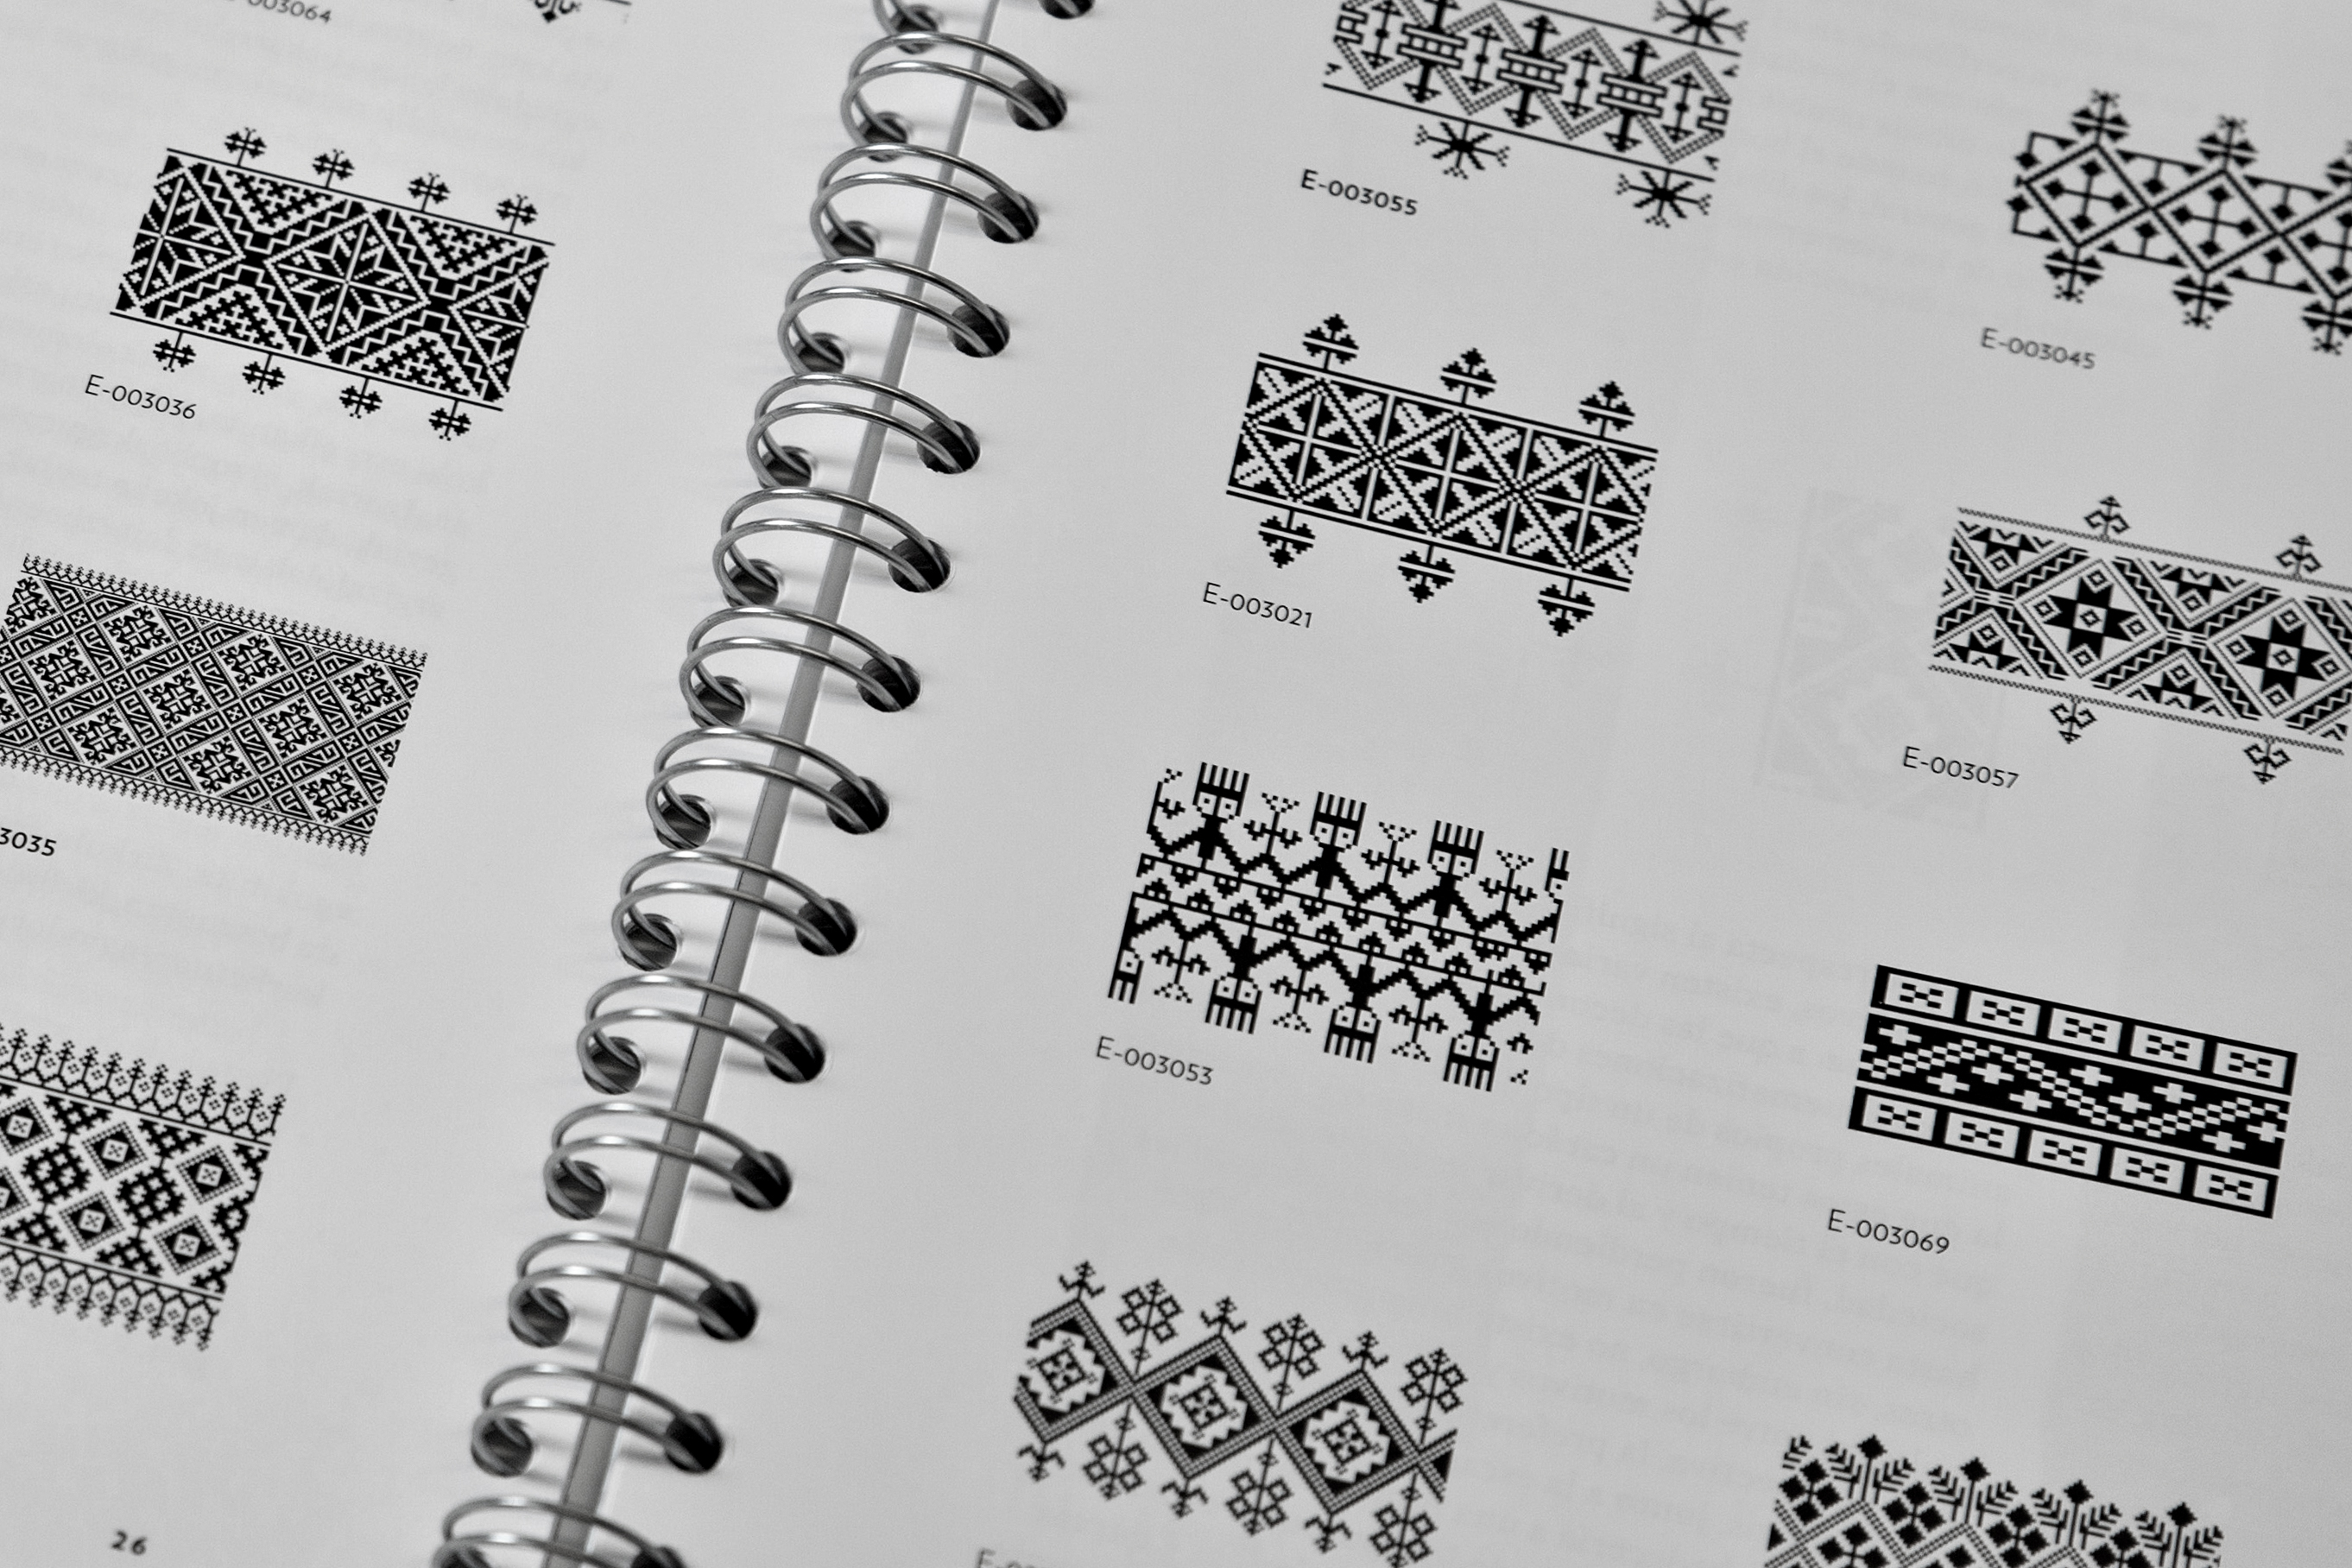 Bordados - Diseño editorial para STM by Strogoff Komunikazioa - Creative Work - $i